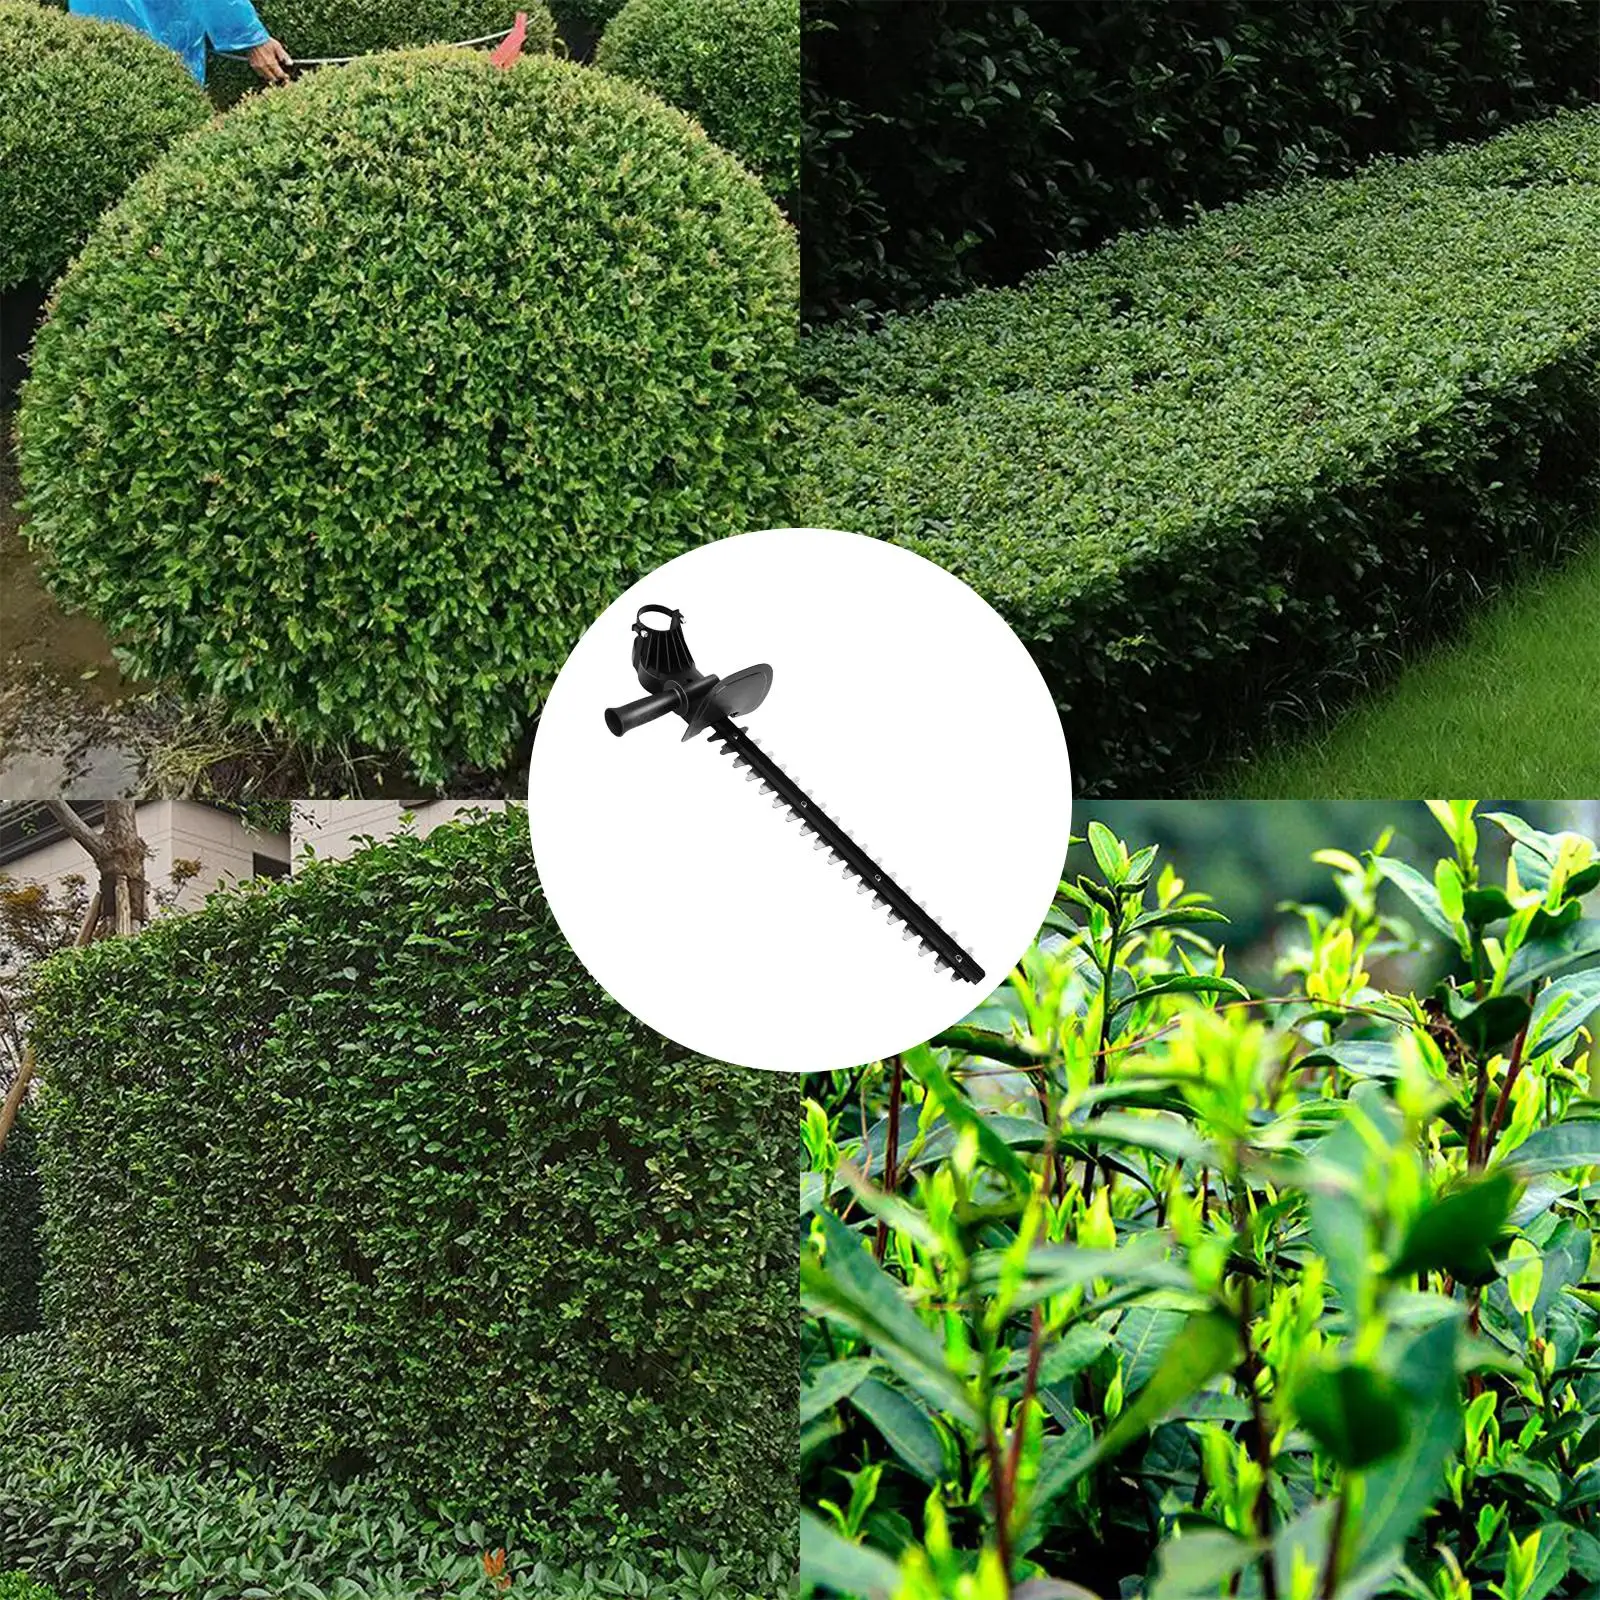 61.5cm Length Double Edged Sharp Blade Angle Grinder to Hedge Trimmer Converter for Flat or Spherical Pruning Garden Modeling